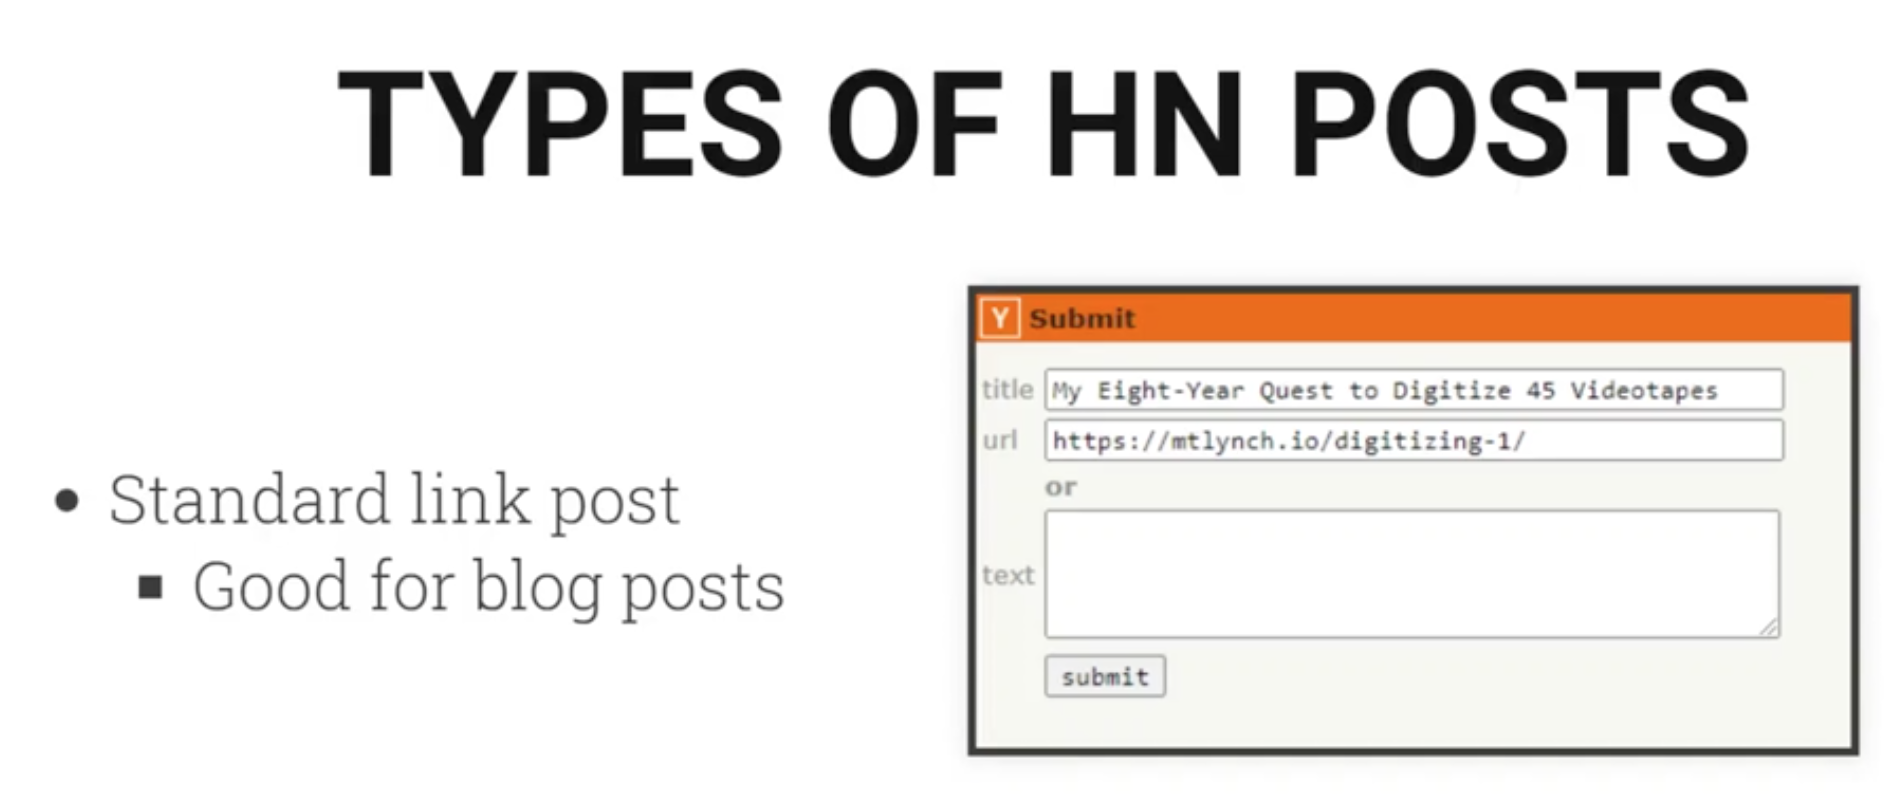 Standard HN post